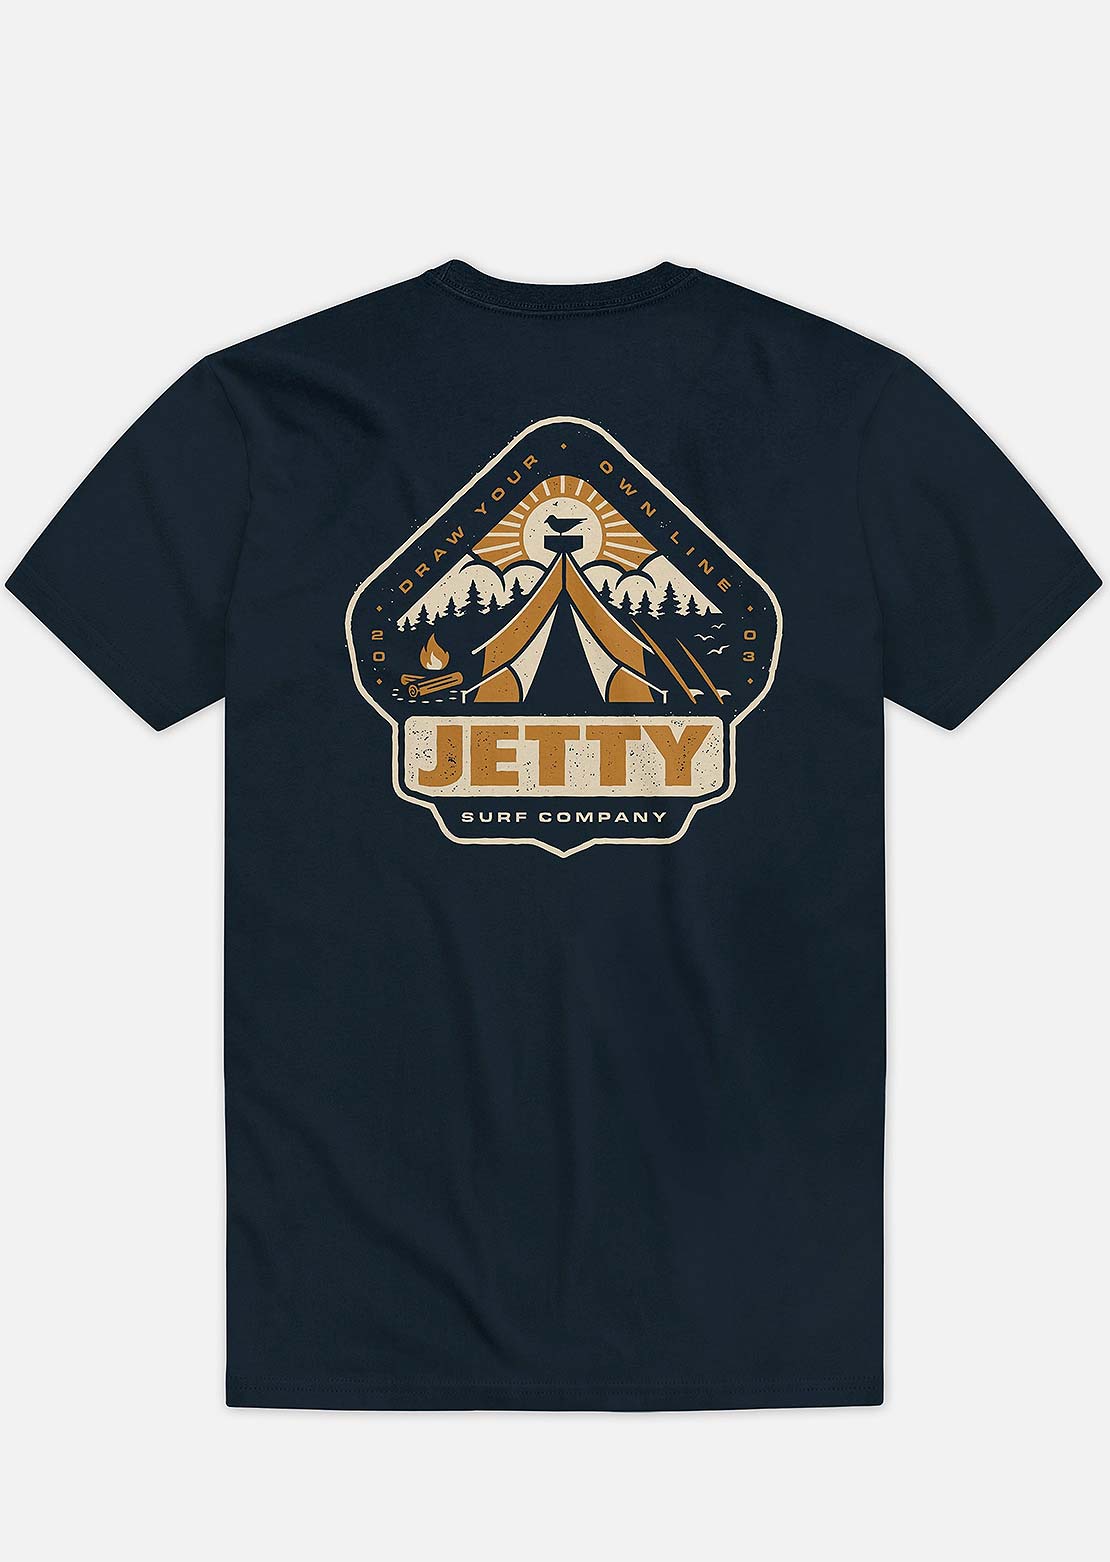 Jetty Junior Camper T-Shirt Black